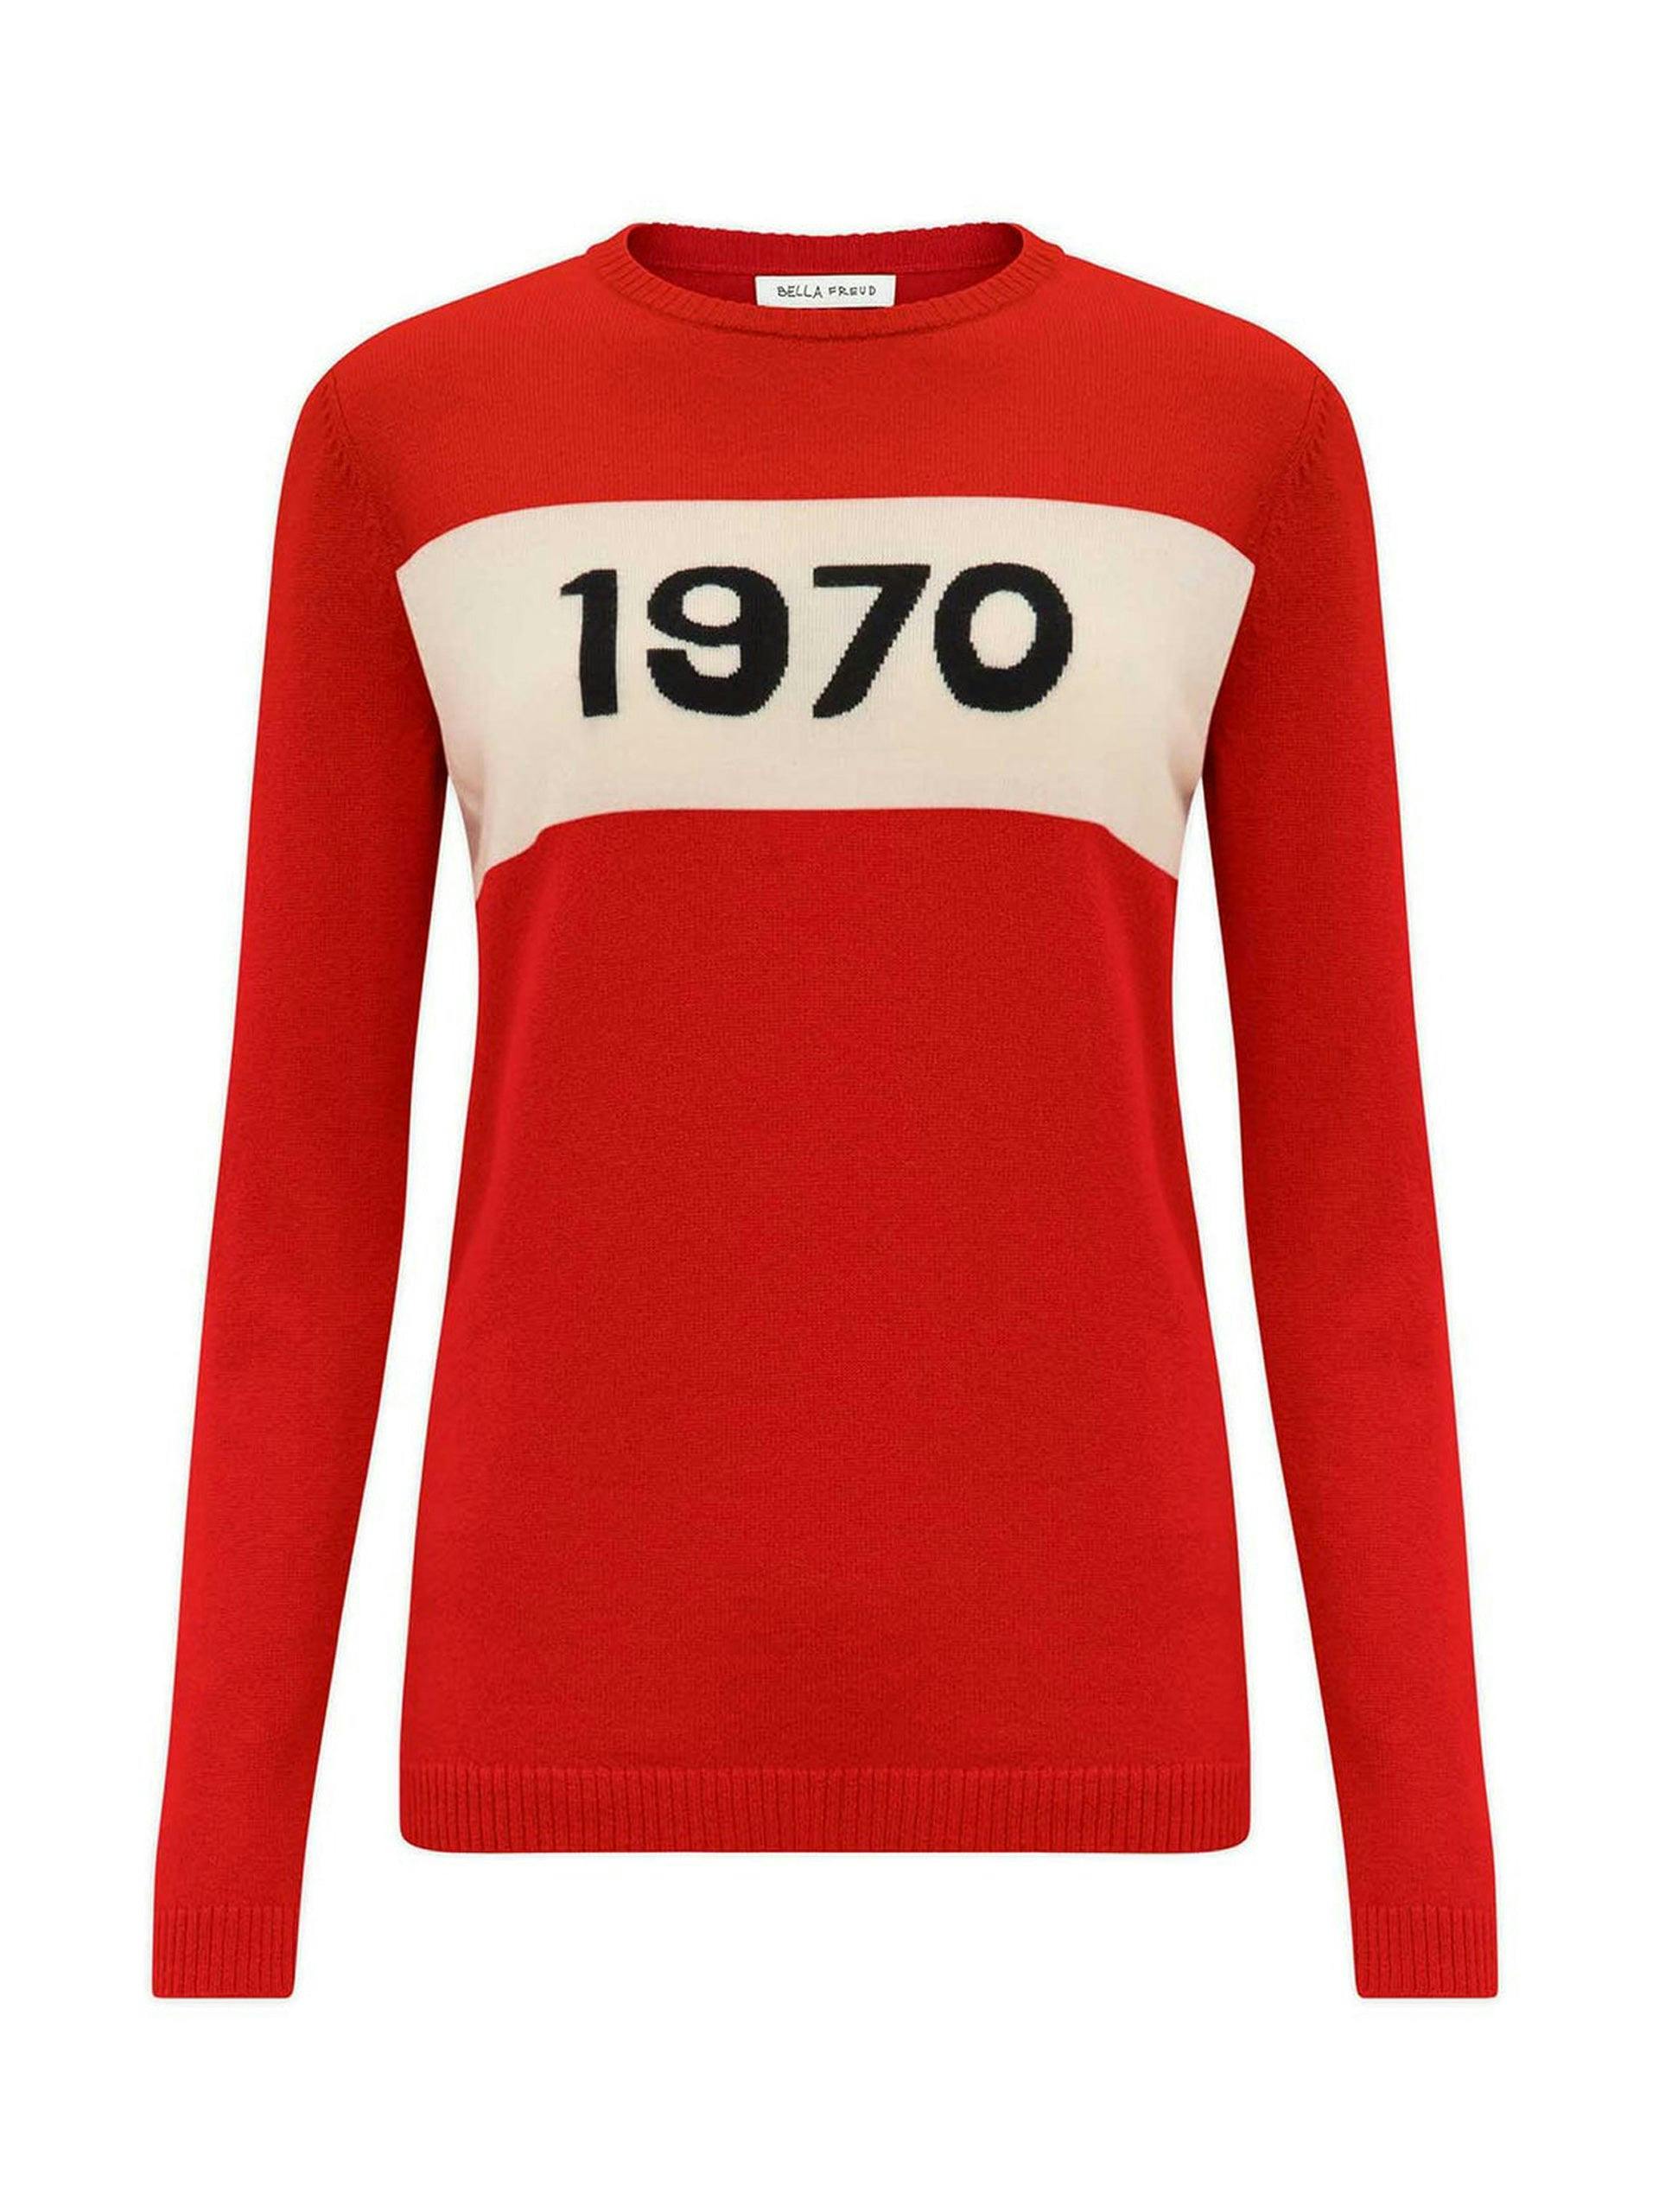 Red 1970 jumper